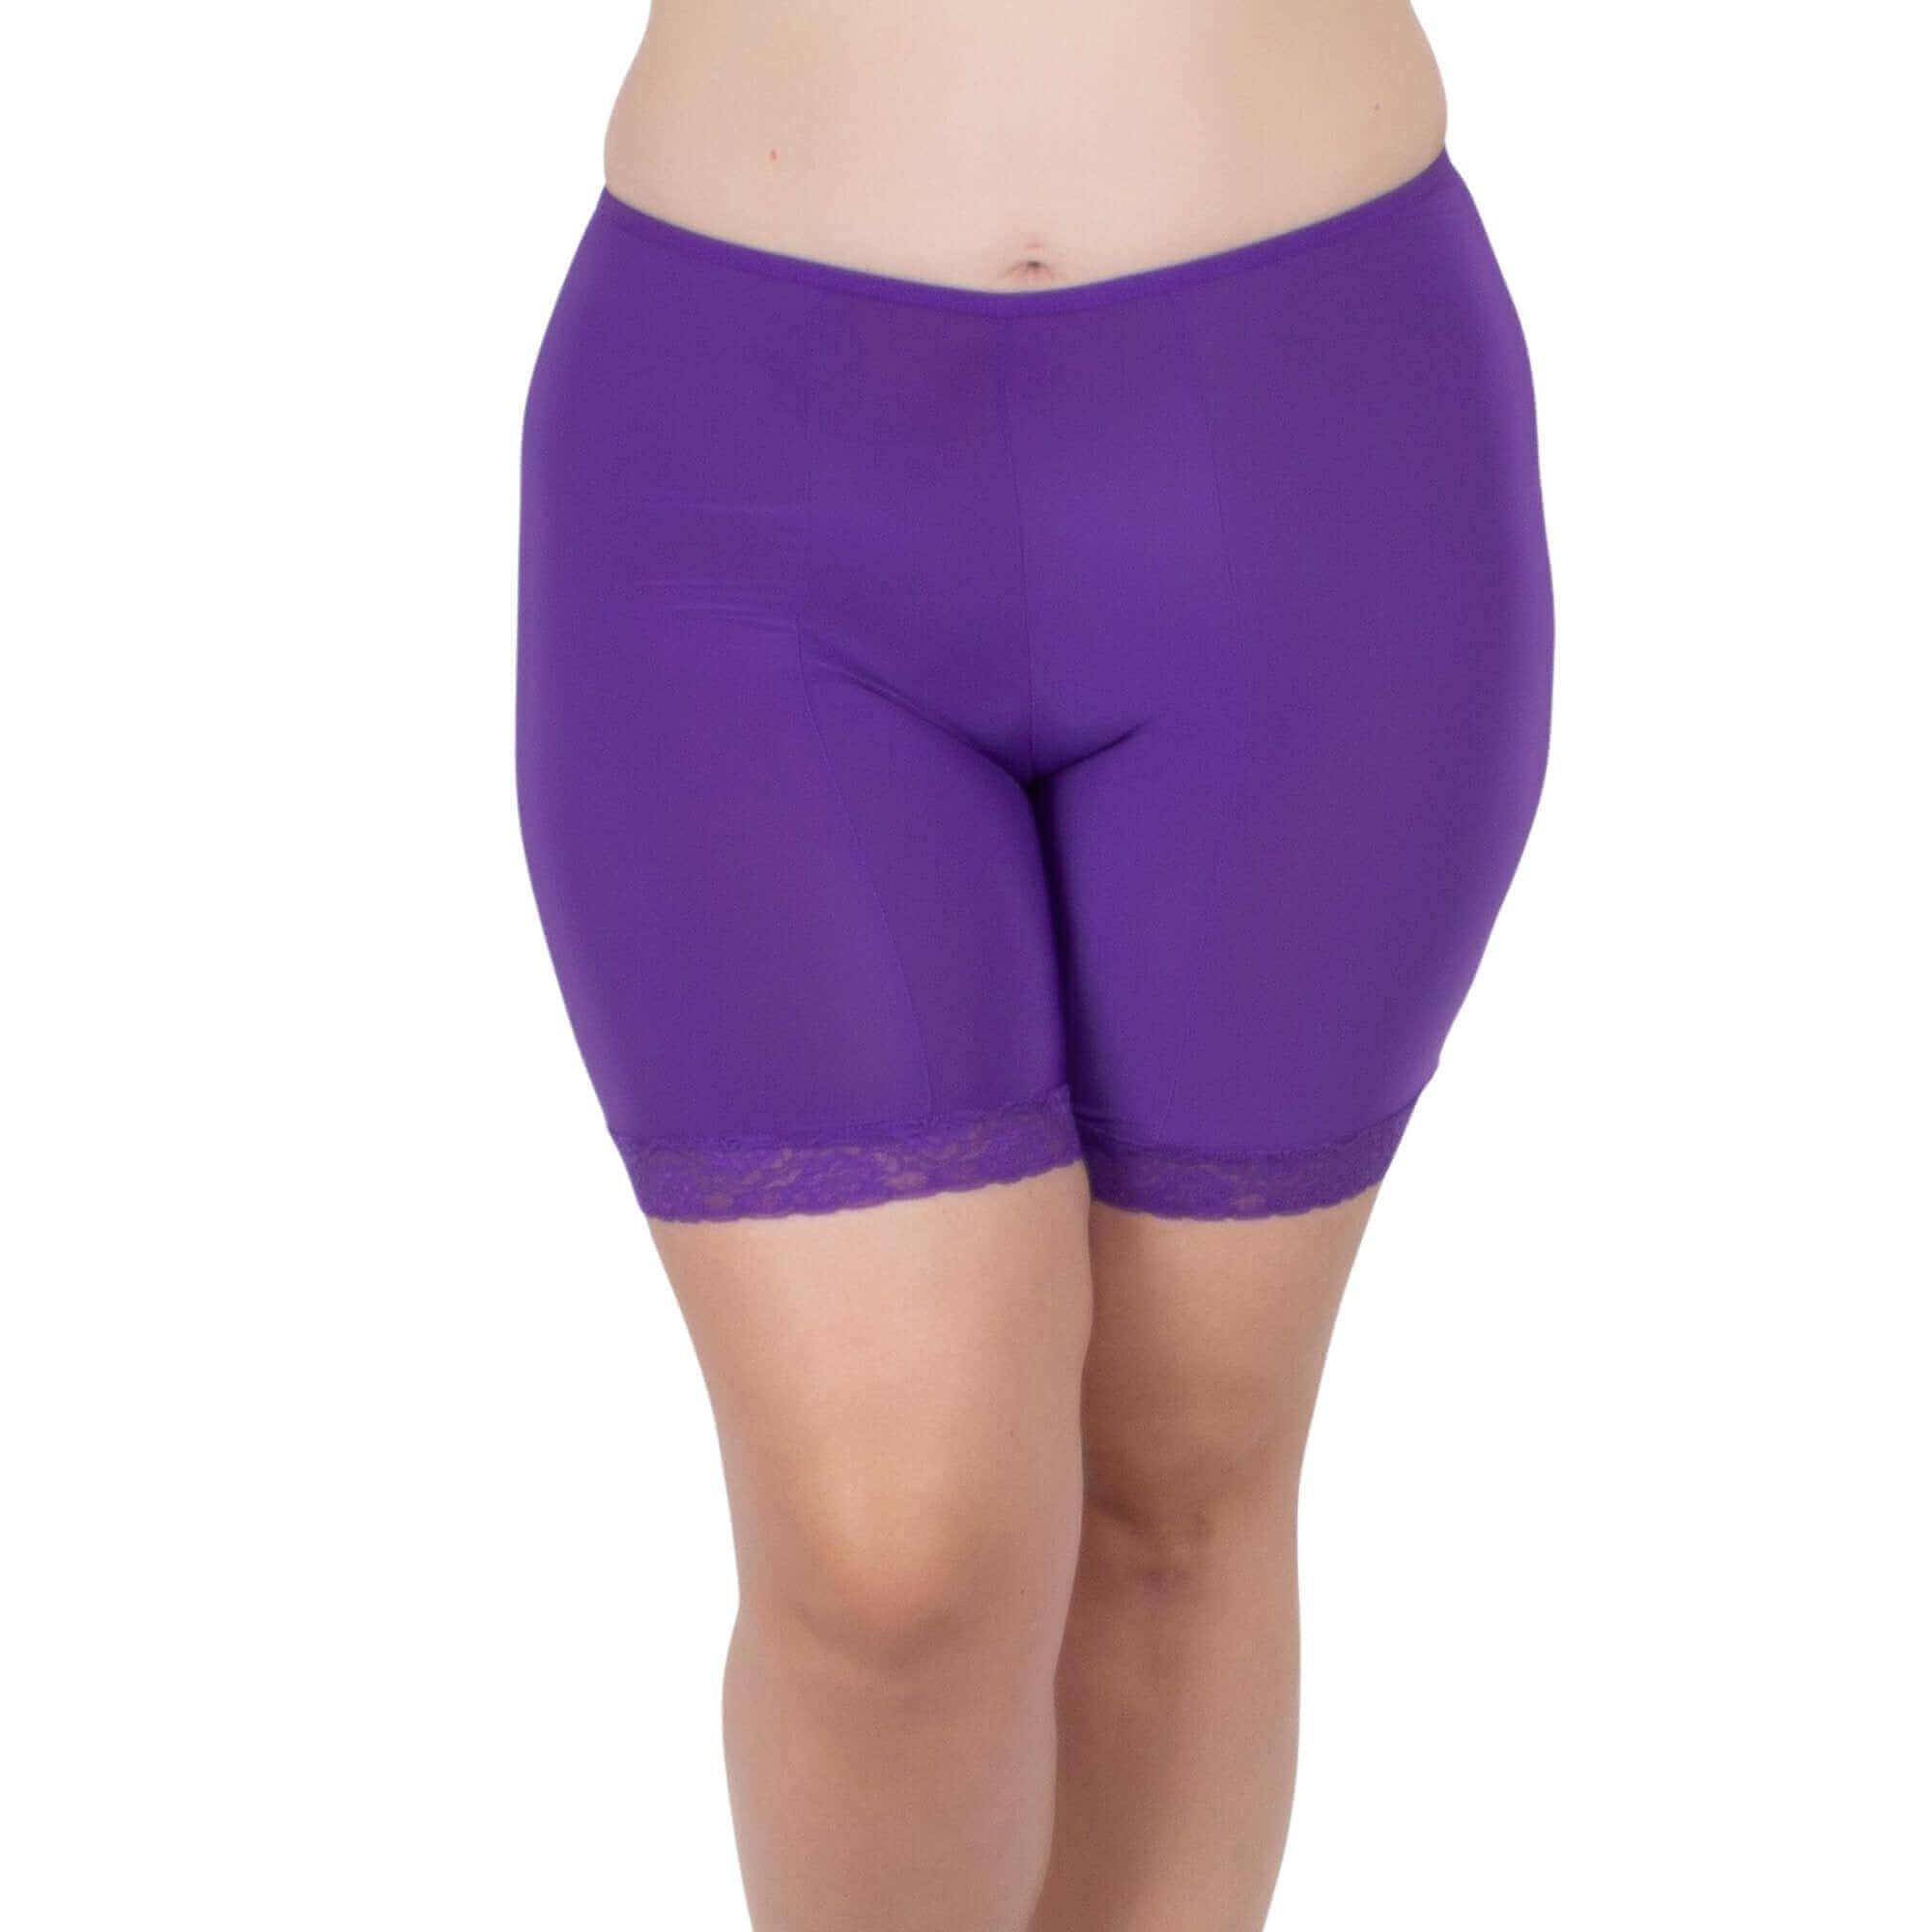 Undersummers Classic Shortlette™ slip shorts are rash guard panty shorts.  Comfortable, non-shapewear, thigh p…